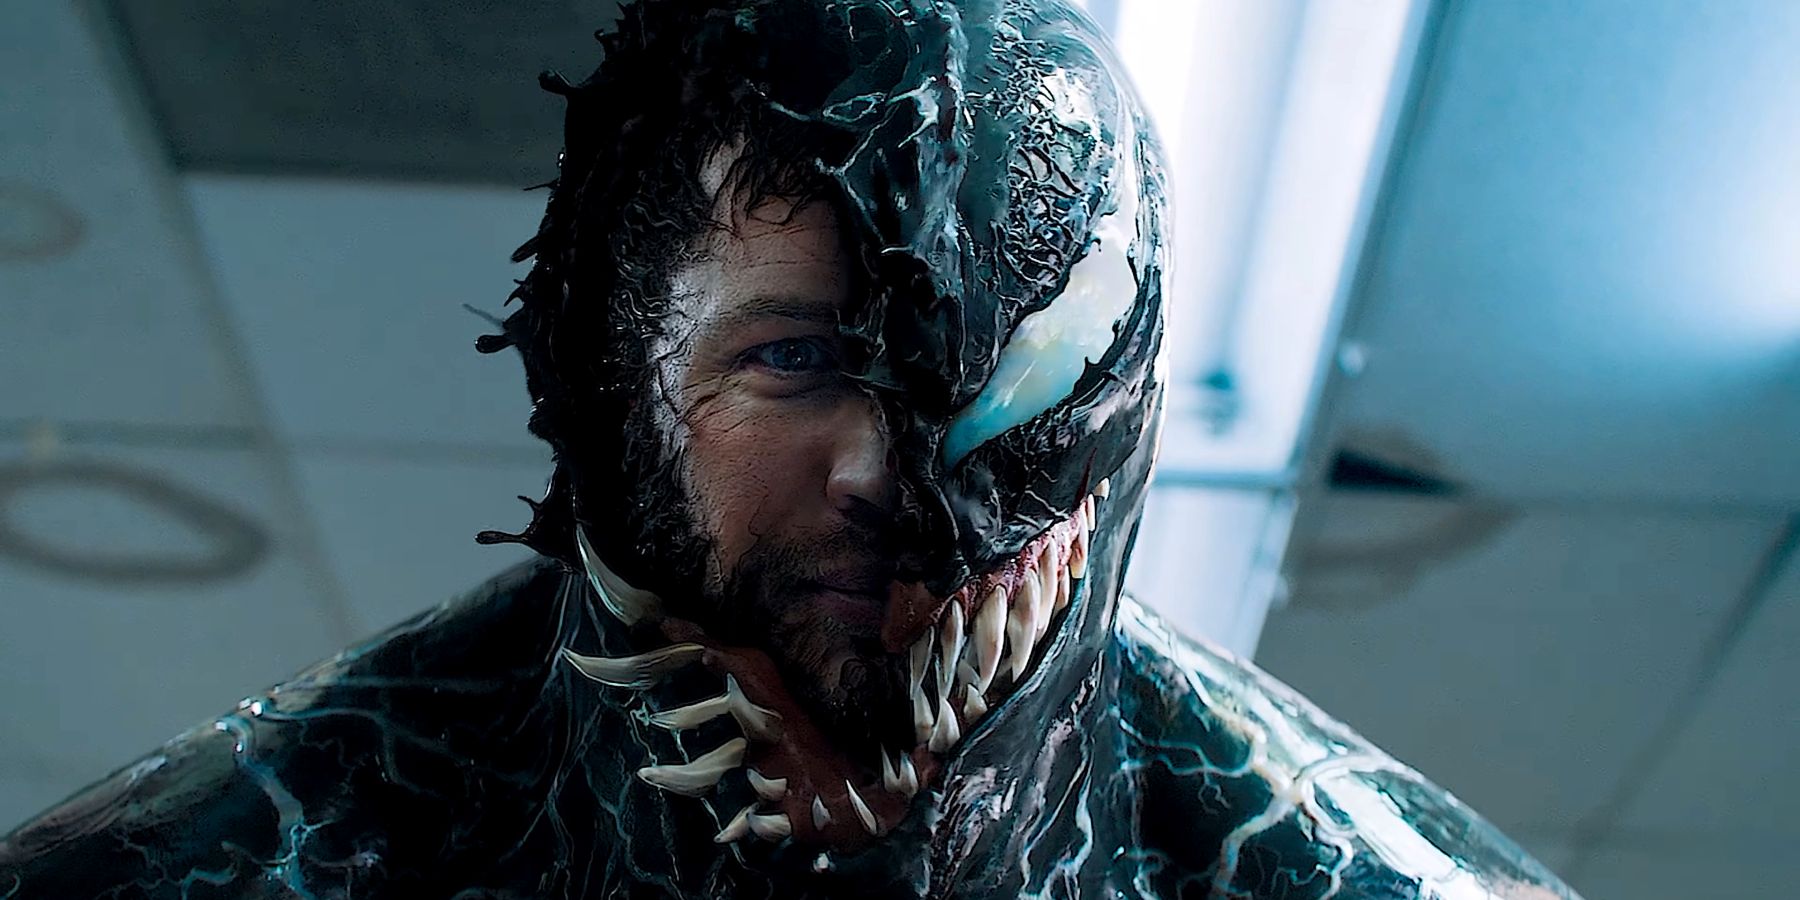 Venom 2, Let There Be Carnage»: comment bousiller un personnage